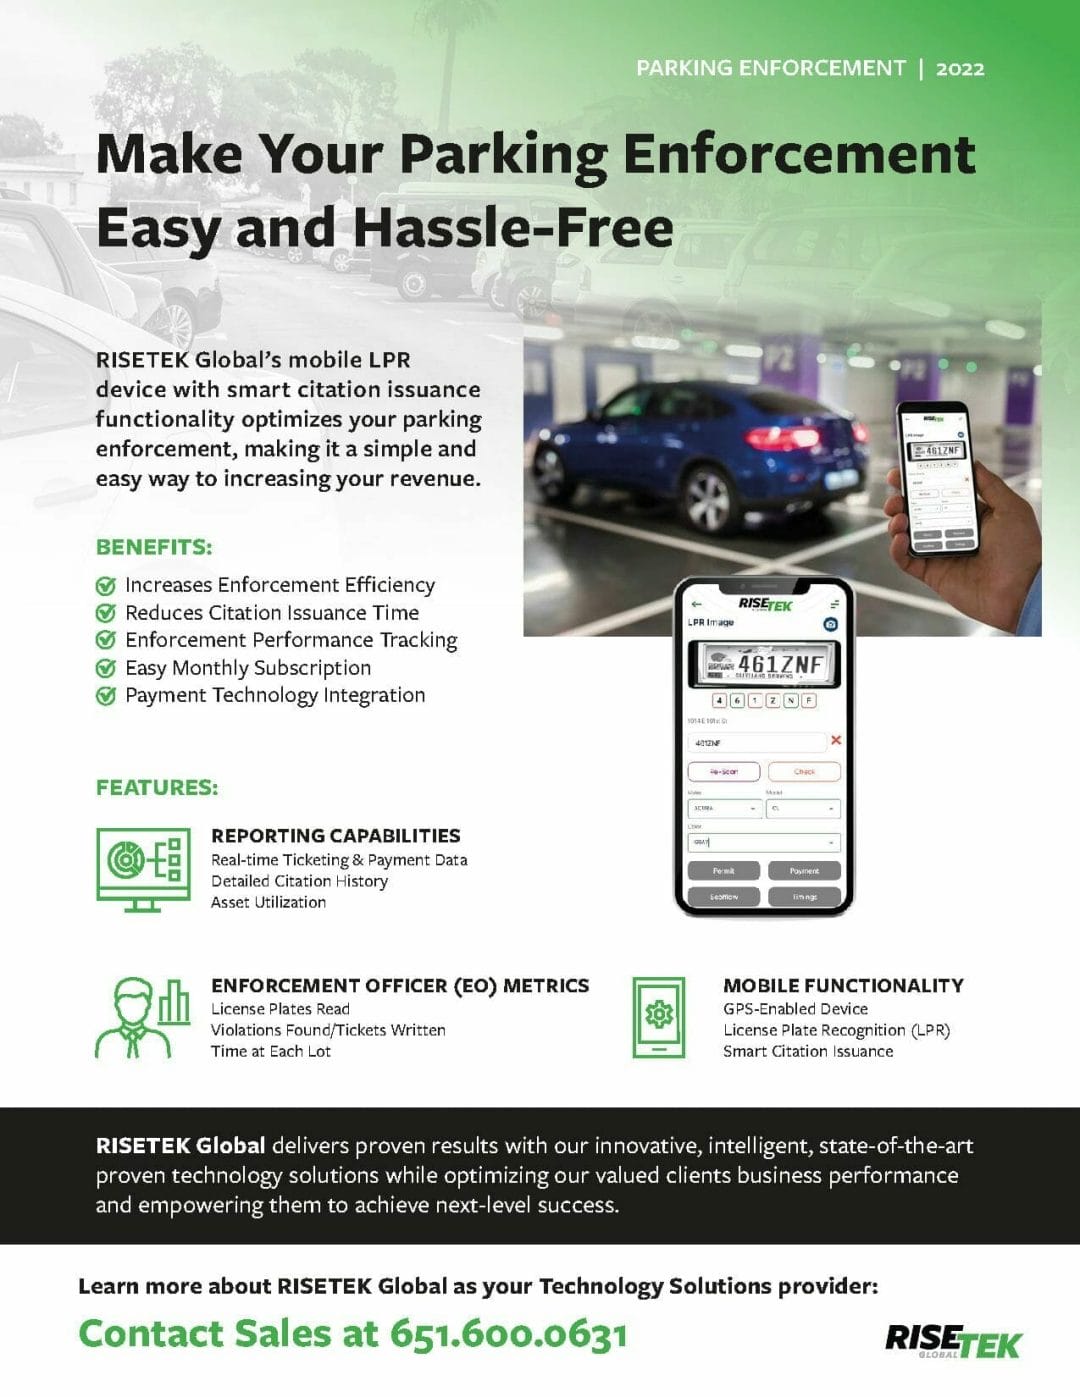 Risetek Global Parking Enforcement App